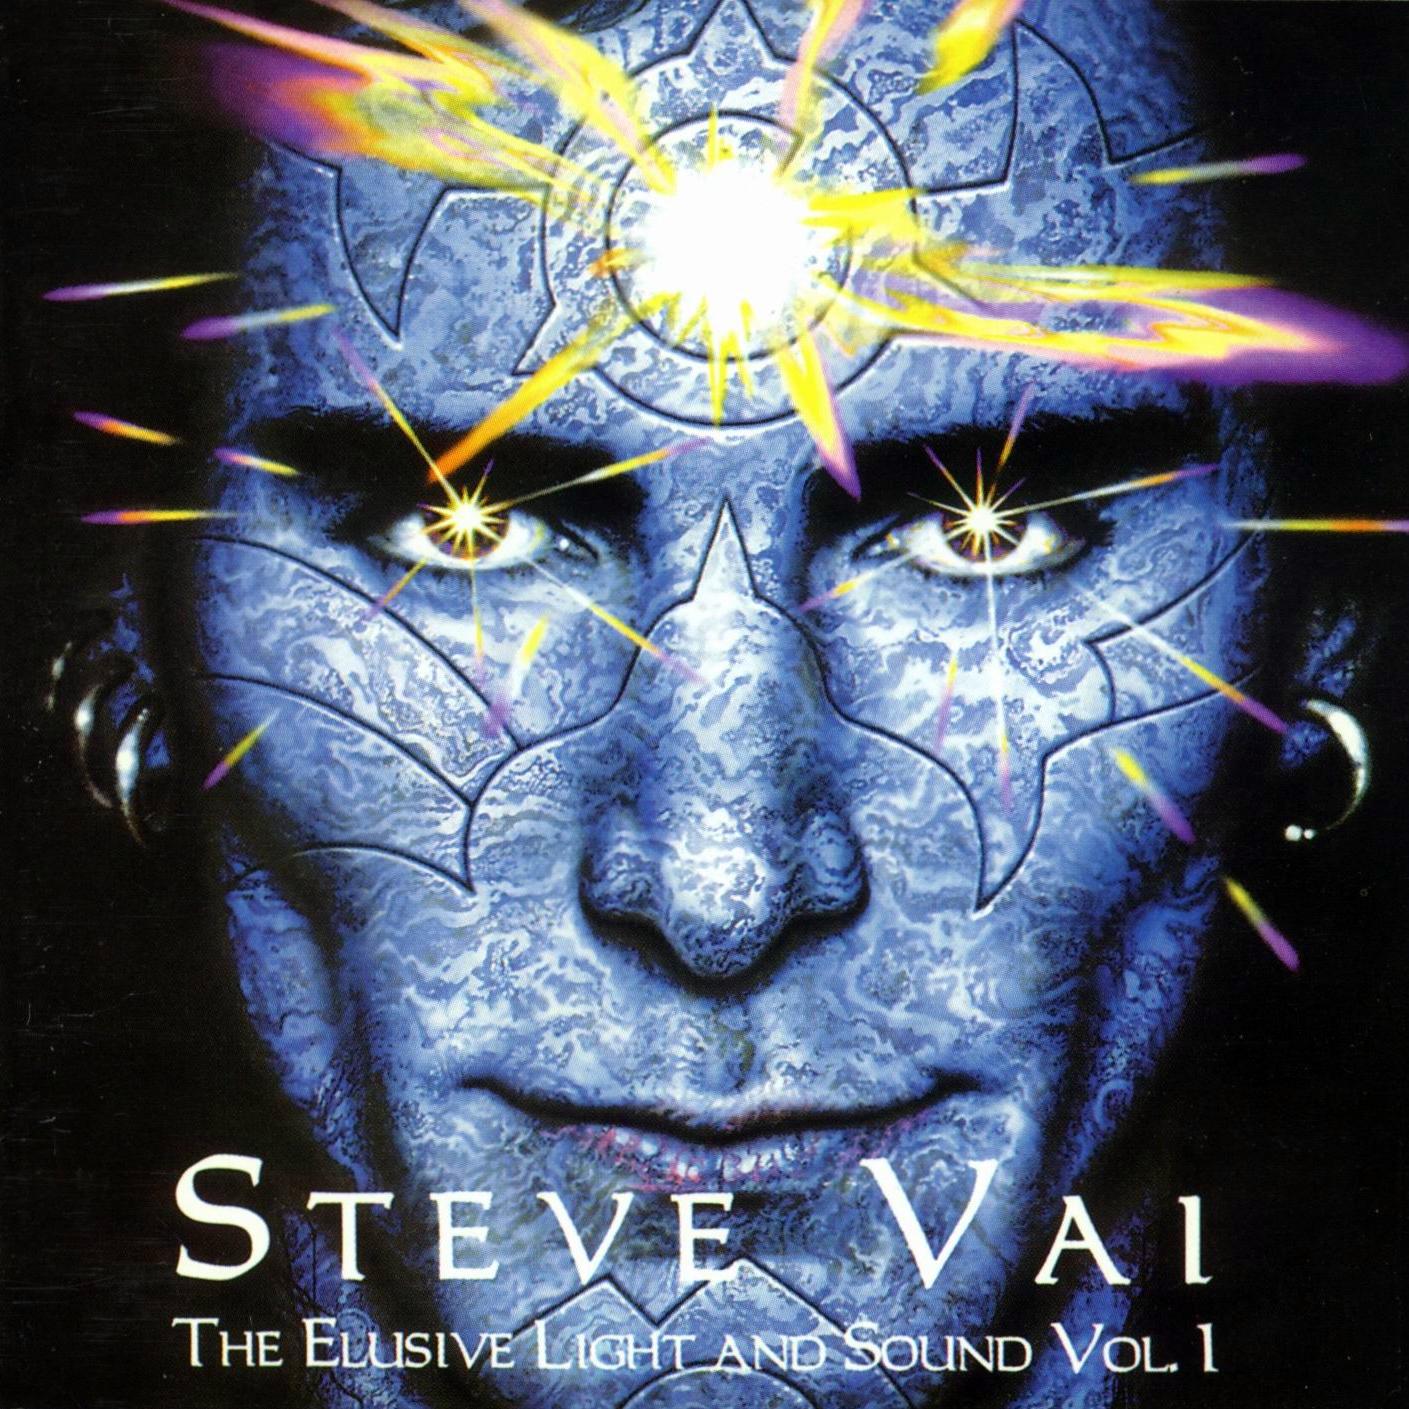 stevevai.it - Steve Vai - The Elusive light and sound vol. 1